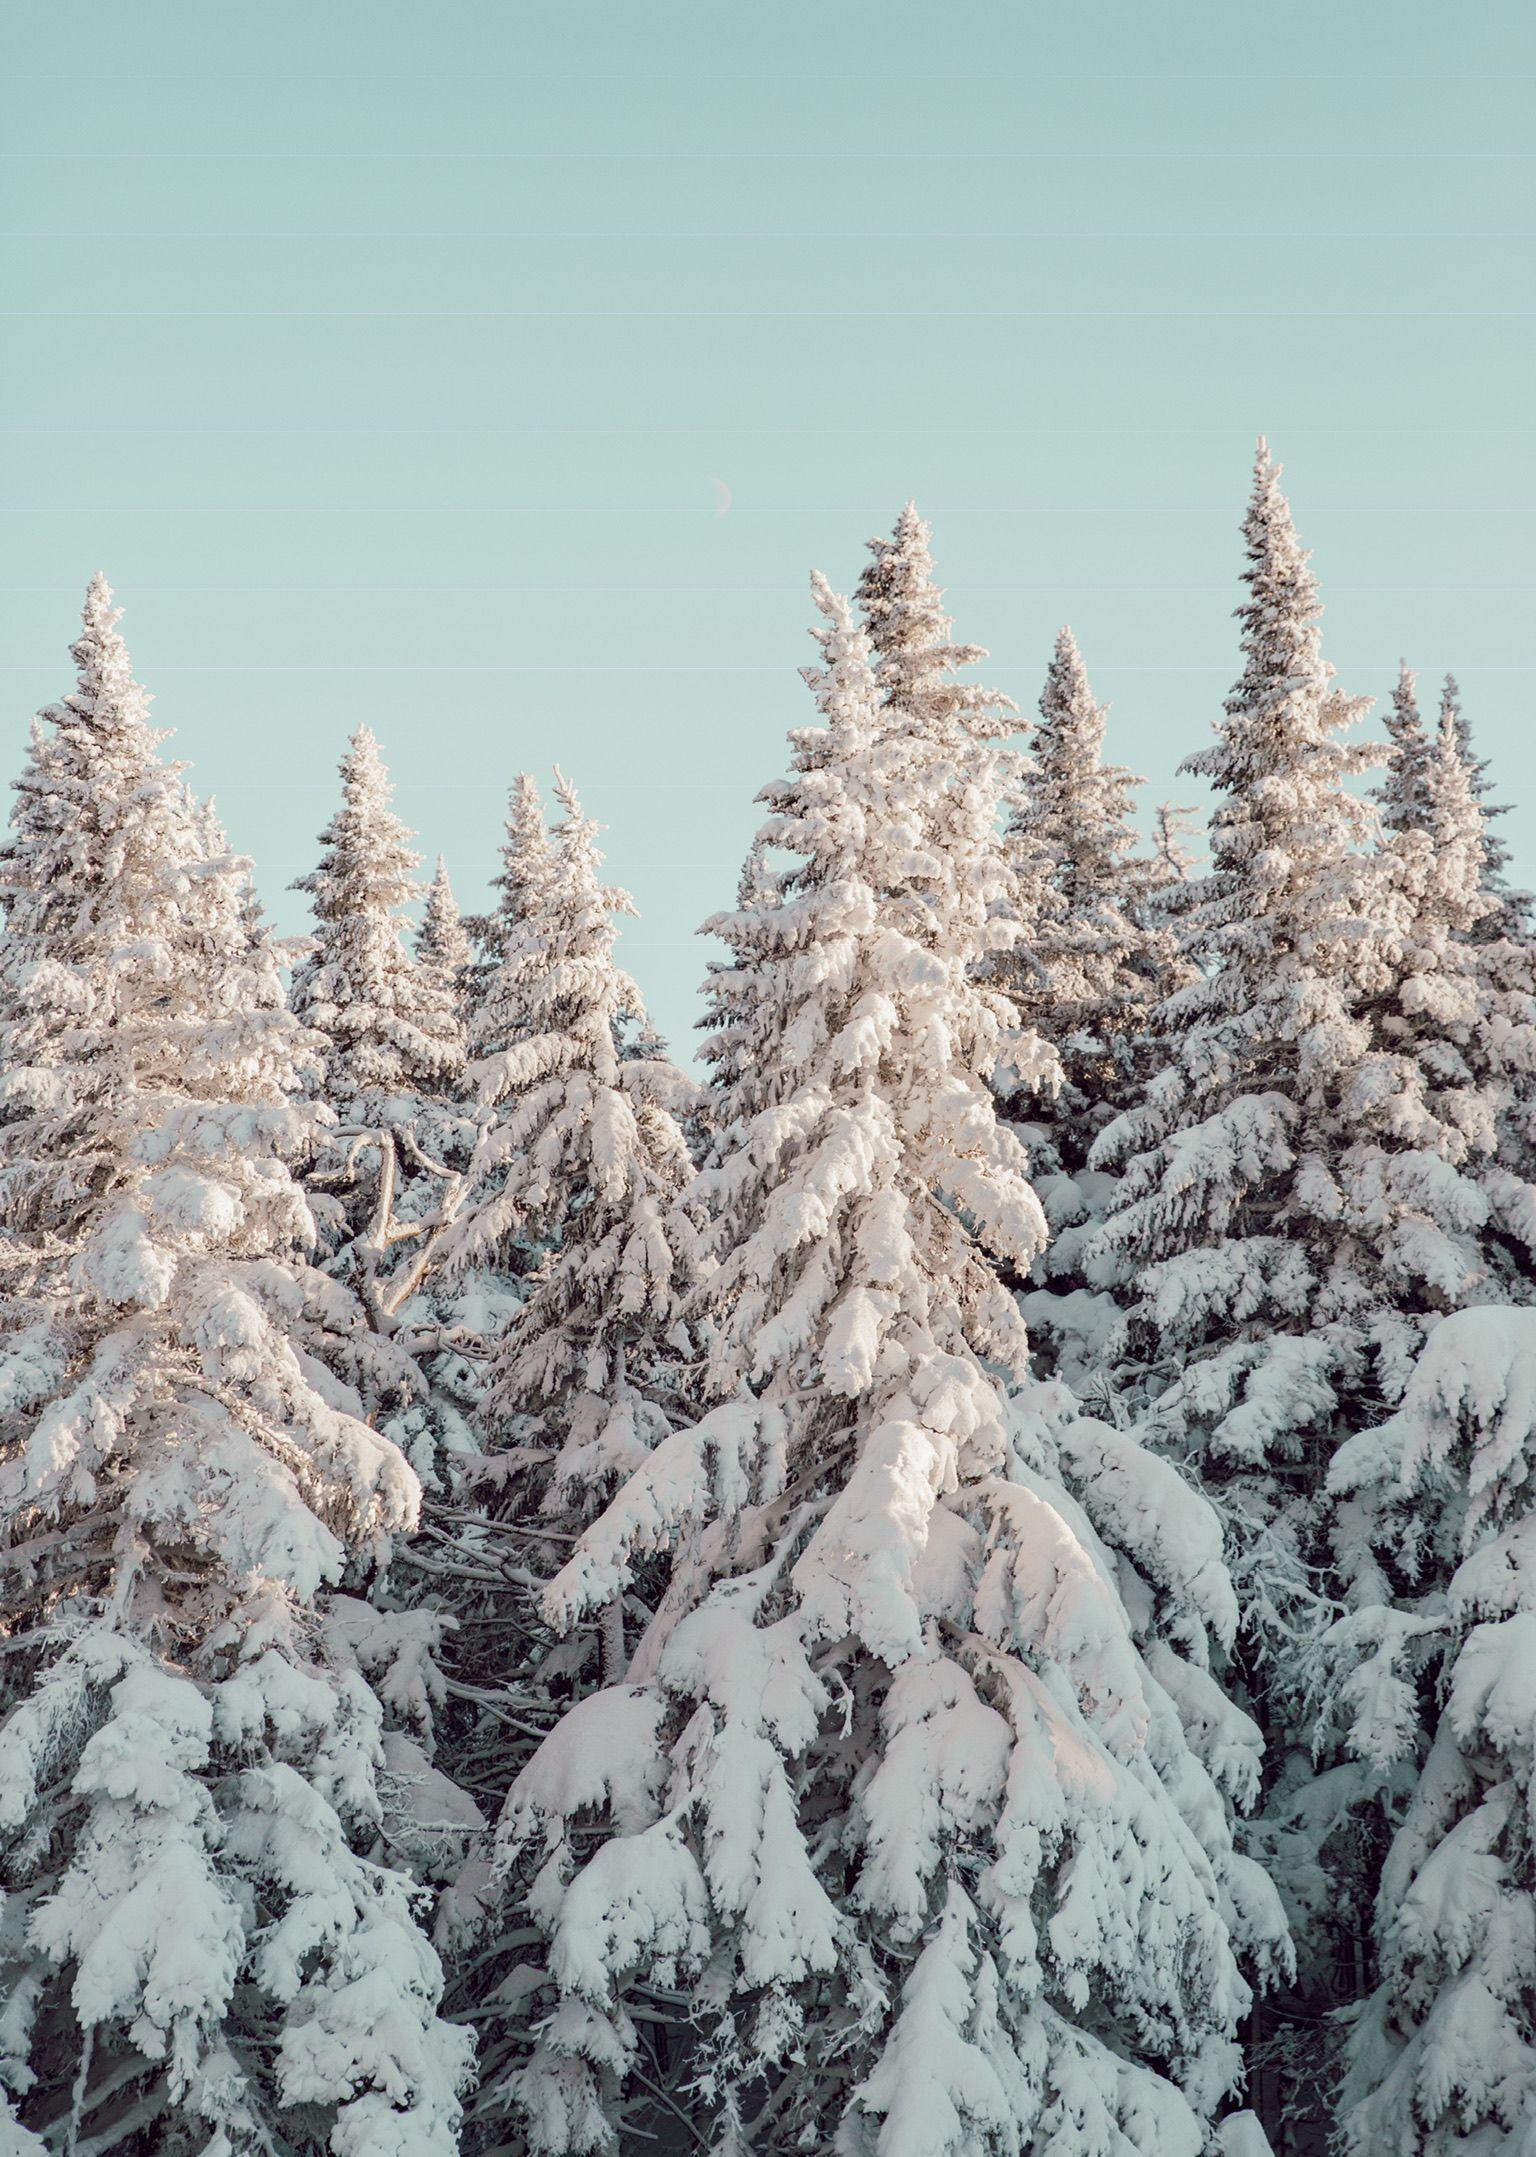 Photo via. Christmas aesthetic, Winter wonderland